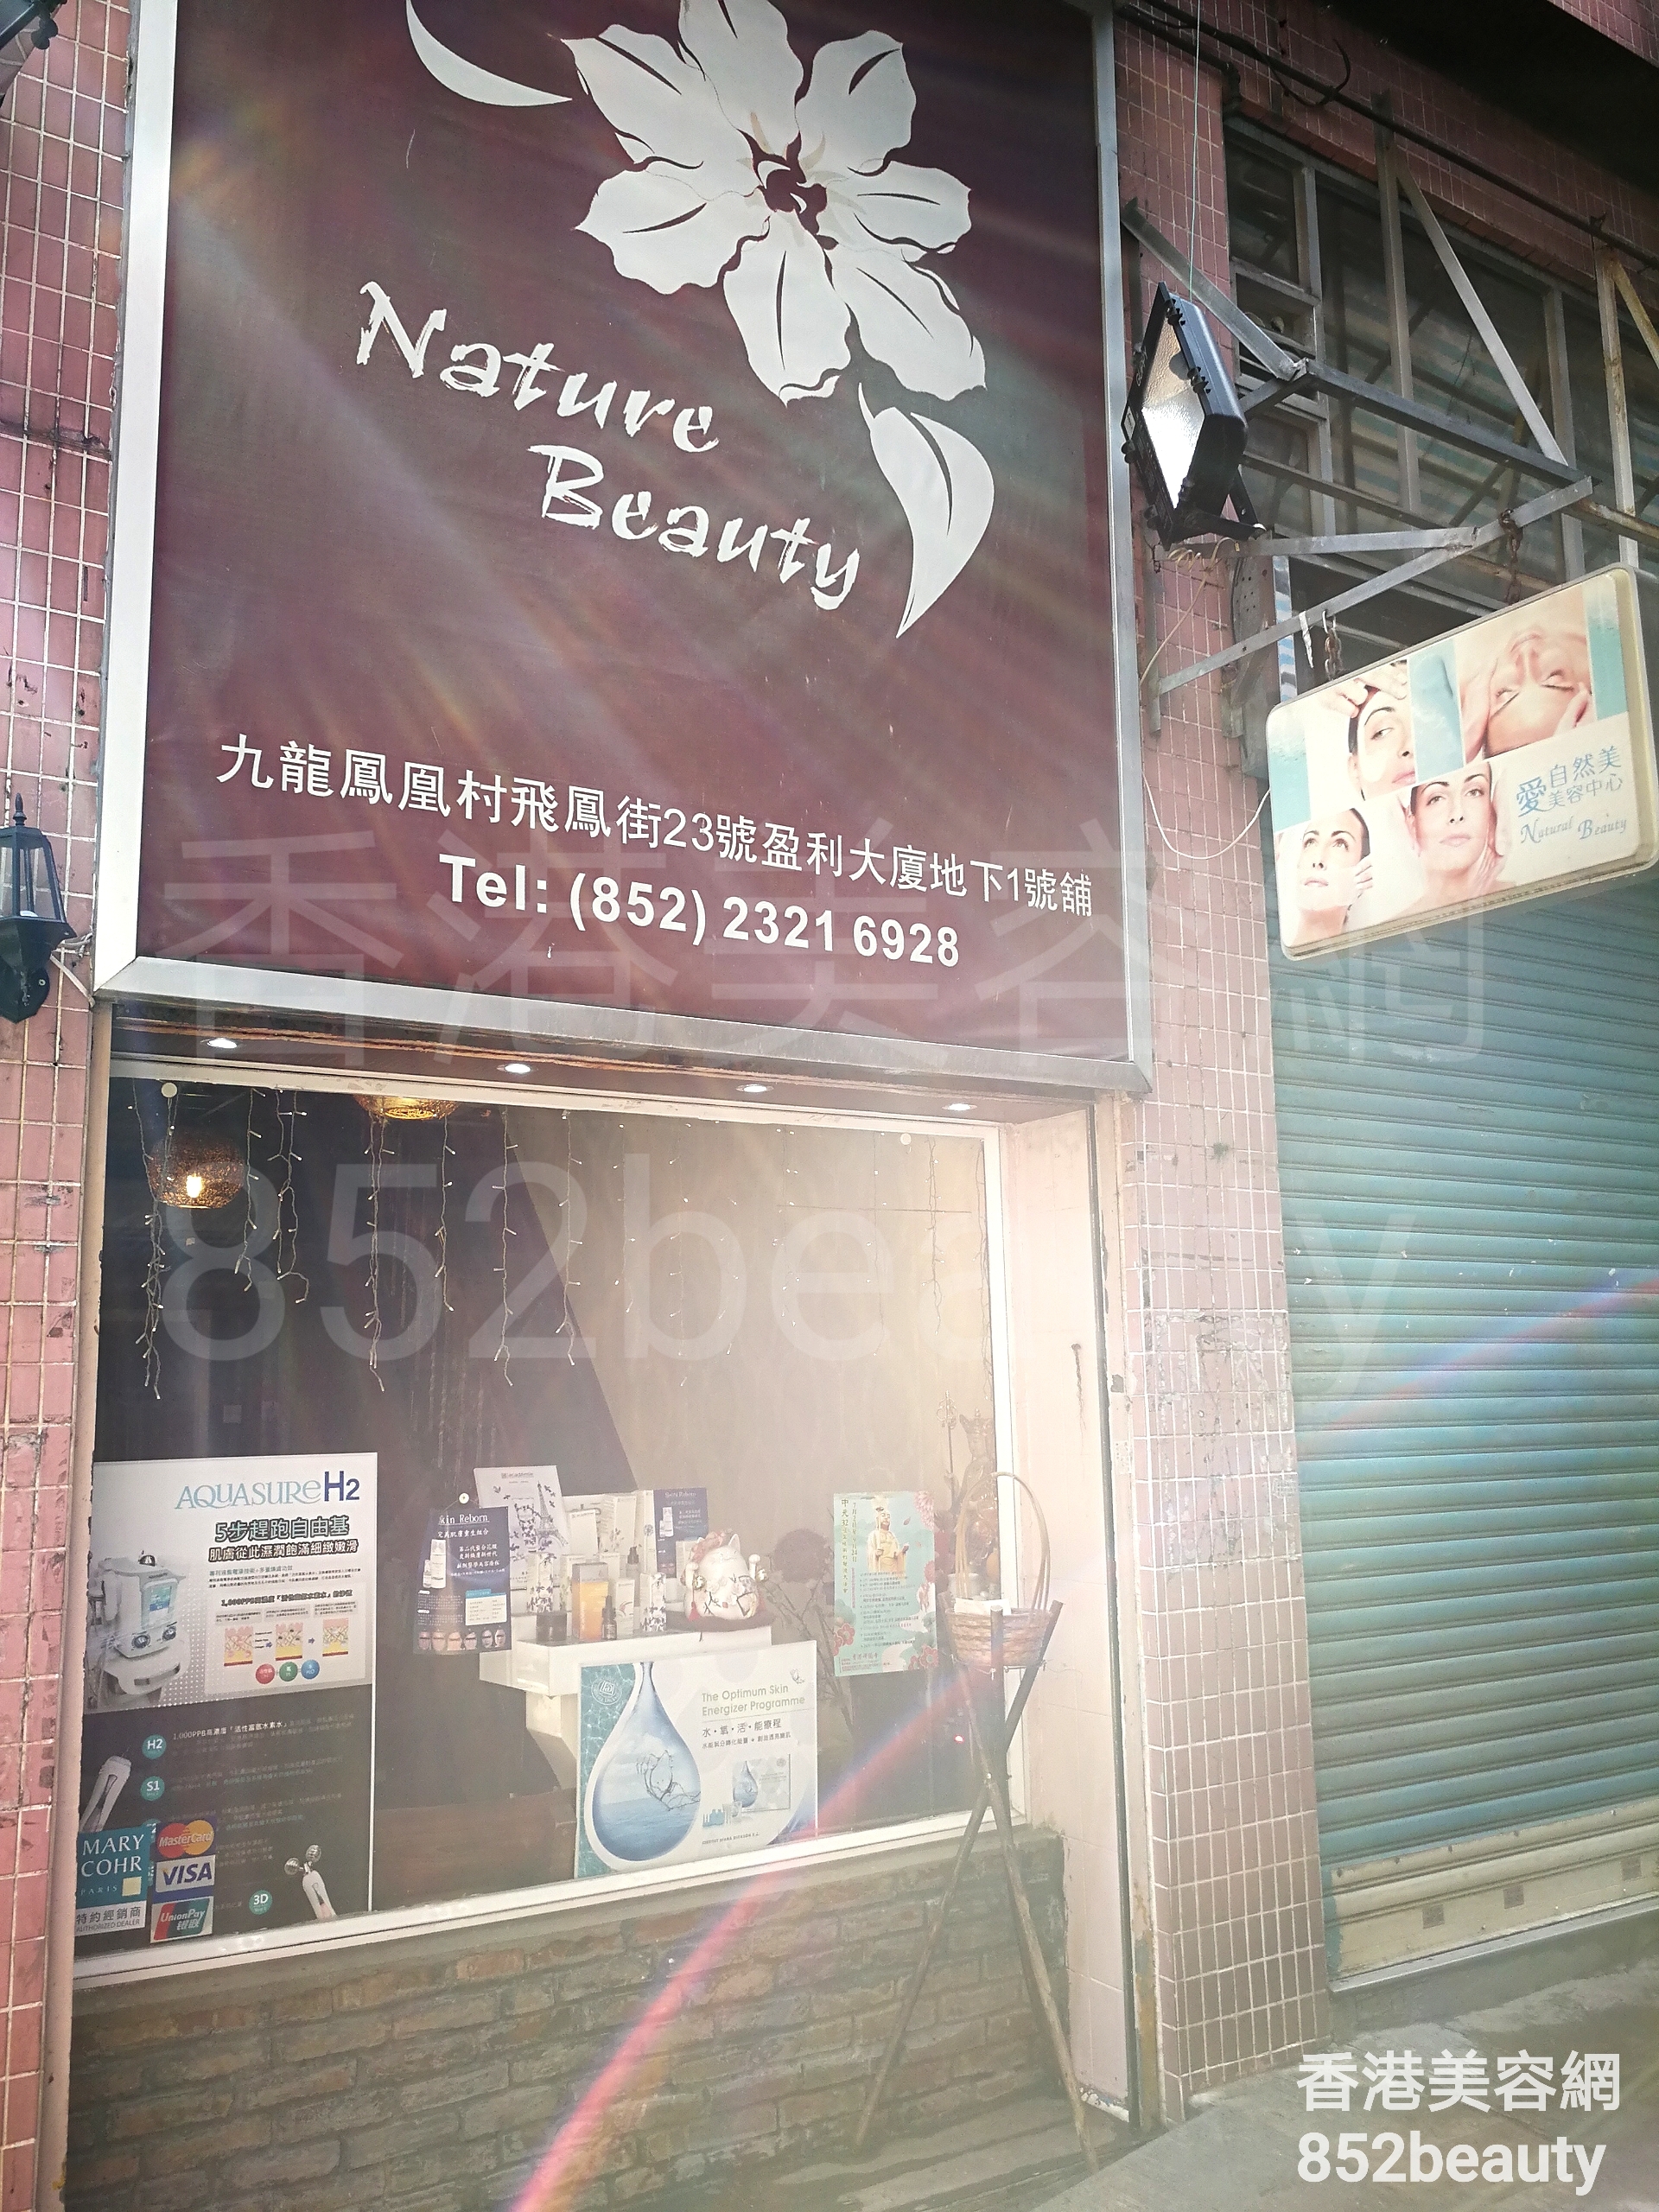 香港美容網 Hong Kong Beauty Salon 美容院 / 美容師: Nature Beauty